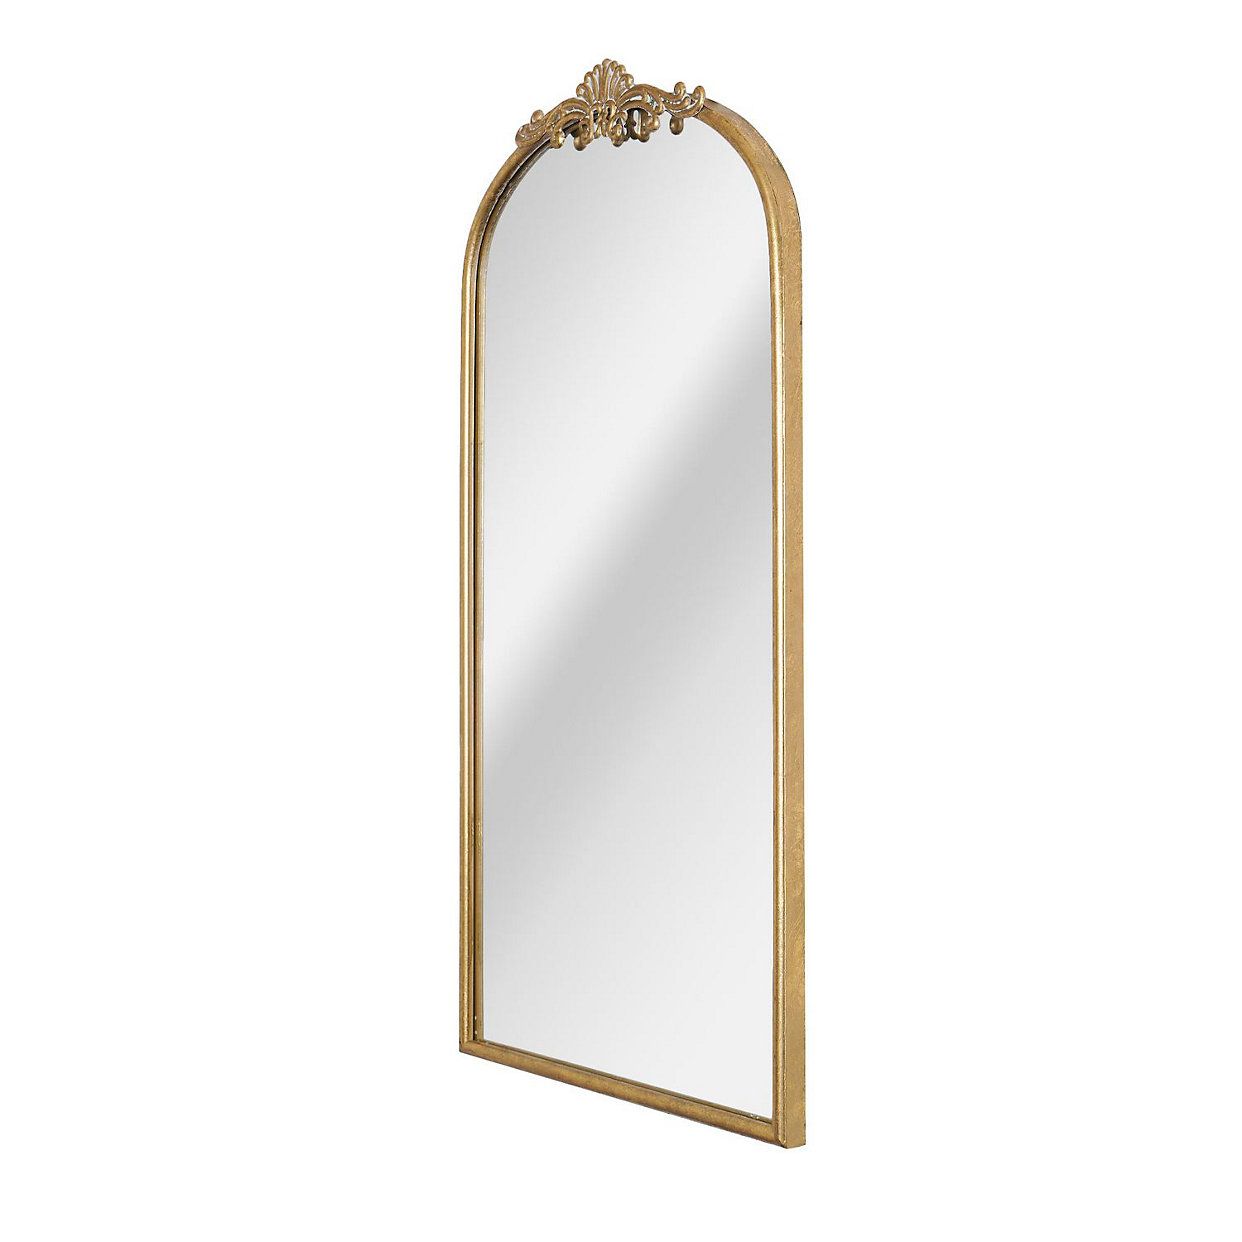 Head West Antique Gold Ornate Wall Mirror | Kohls | Kohl's